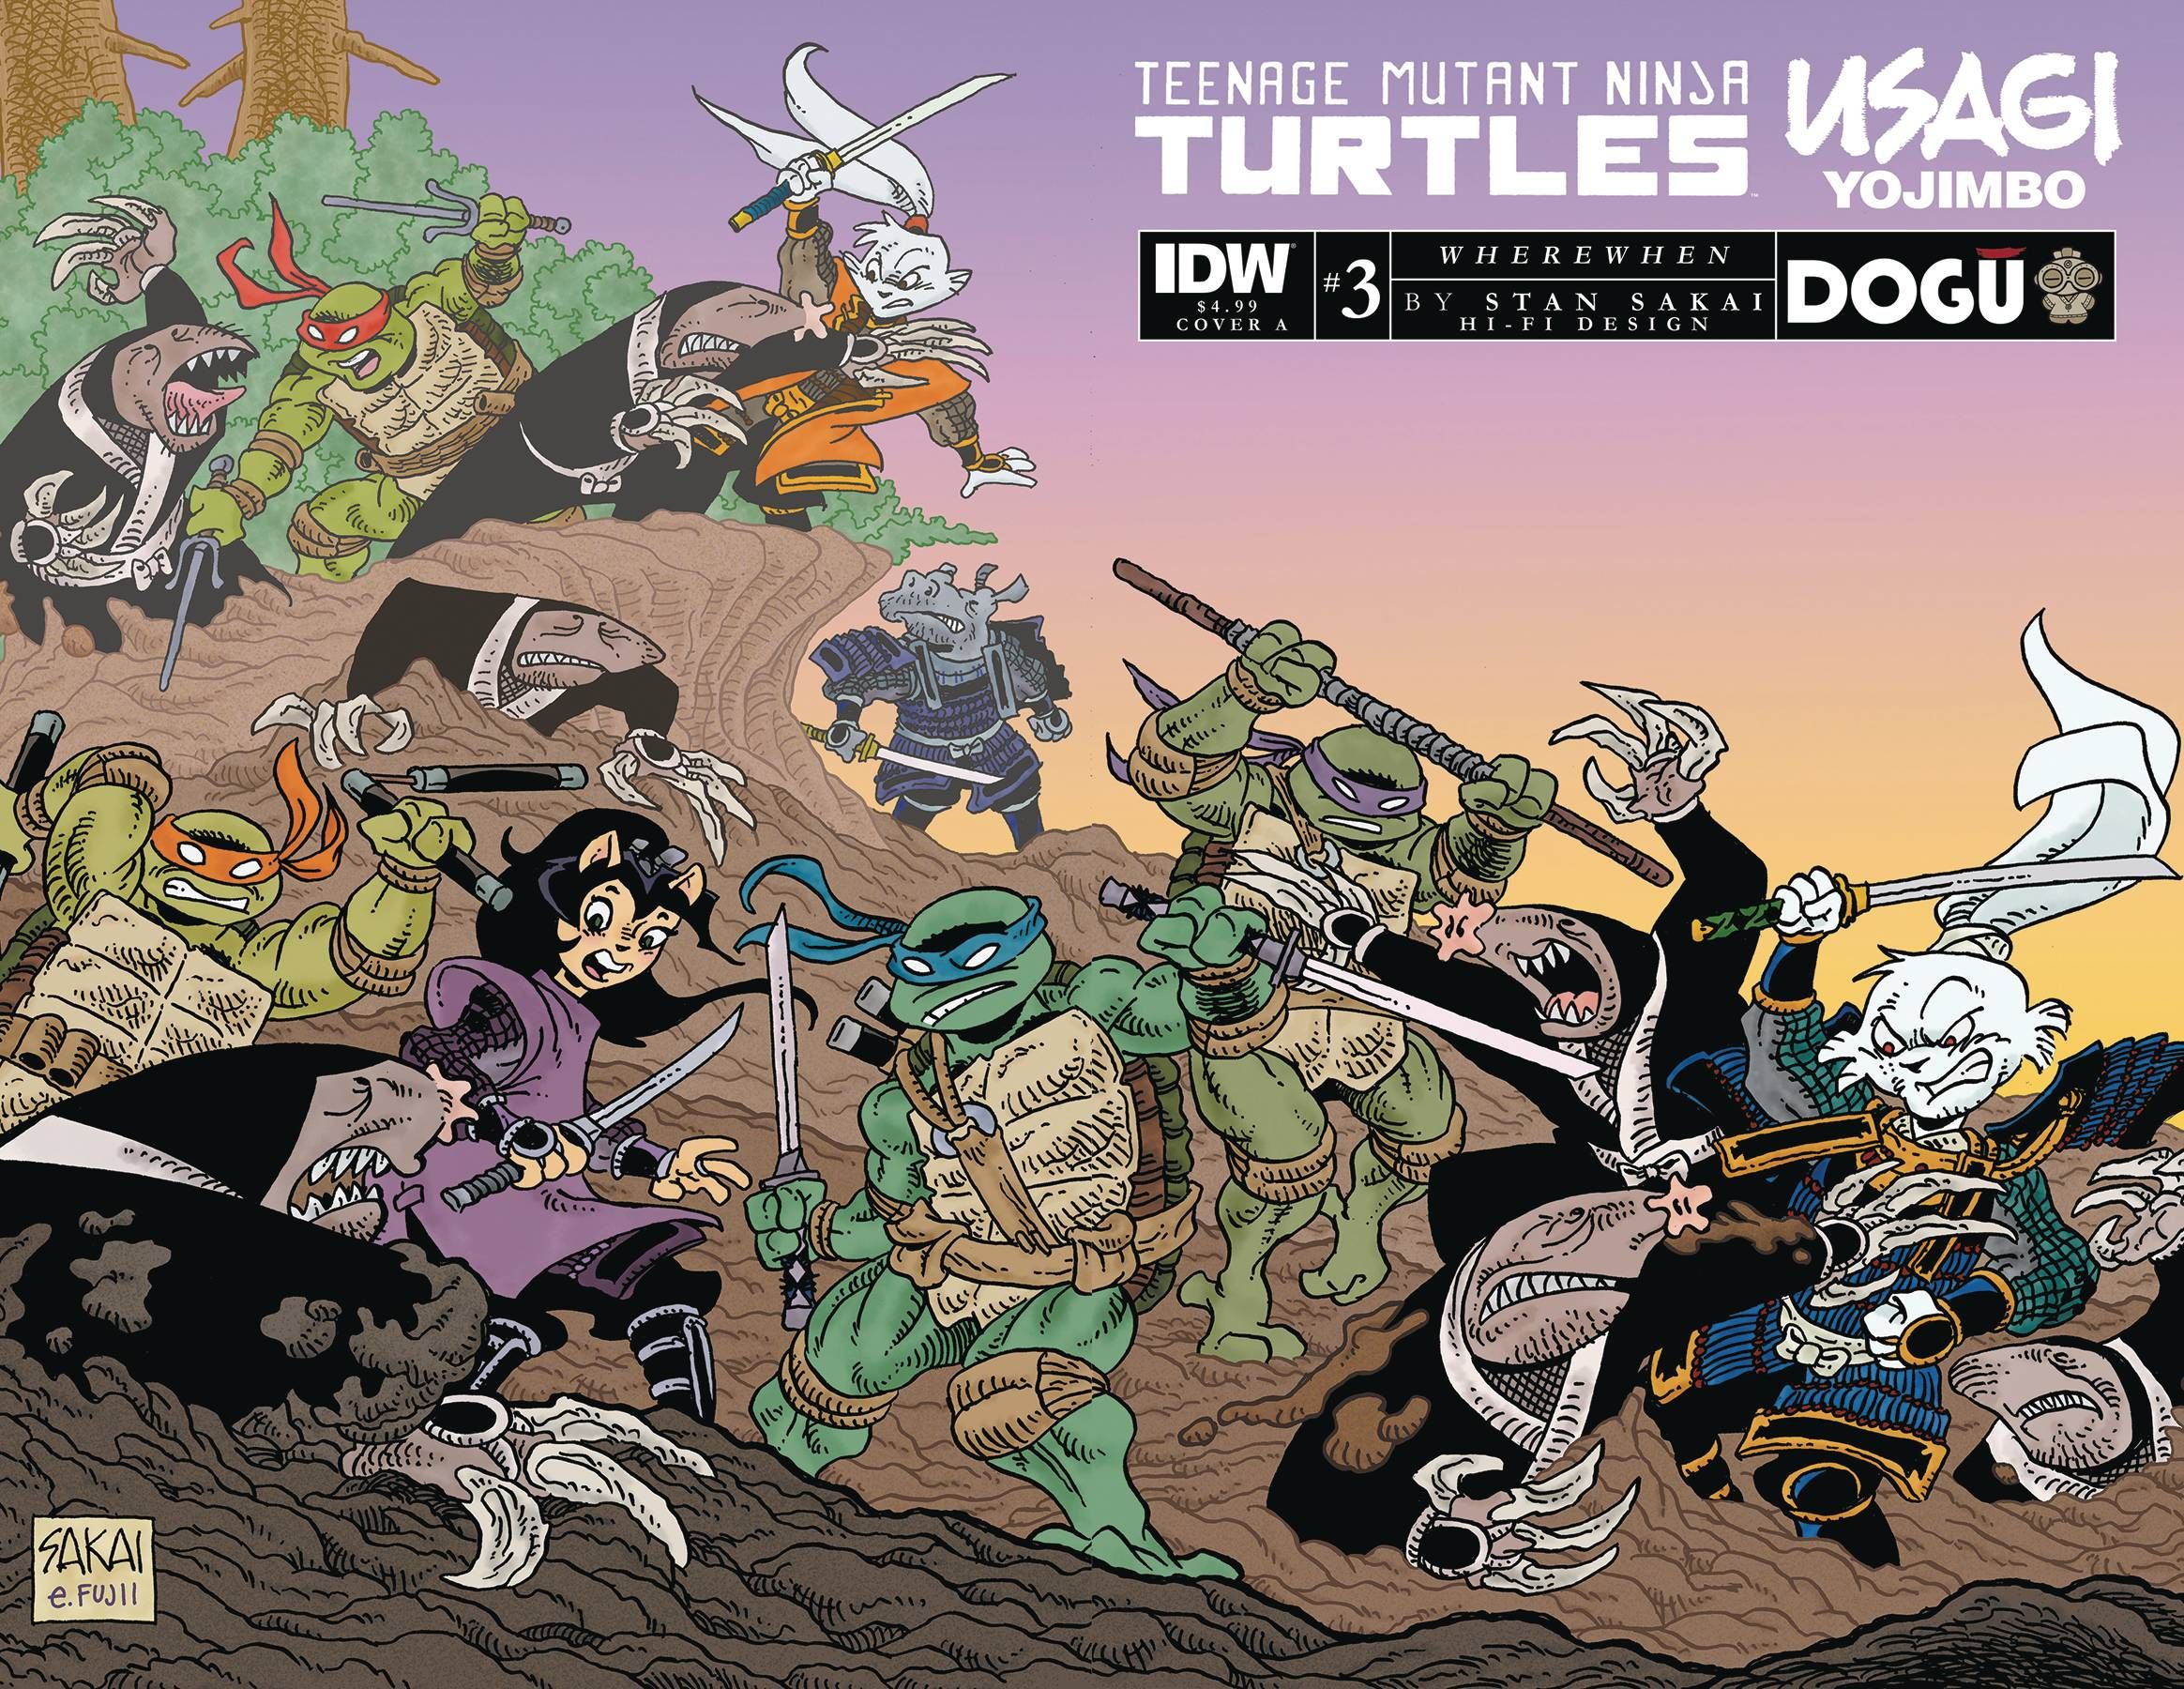 Teenage Mutant Ninja Turtles / Usagi Yojimbo: WhereWhen #3 Comic